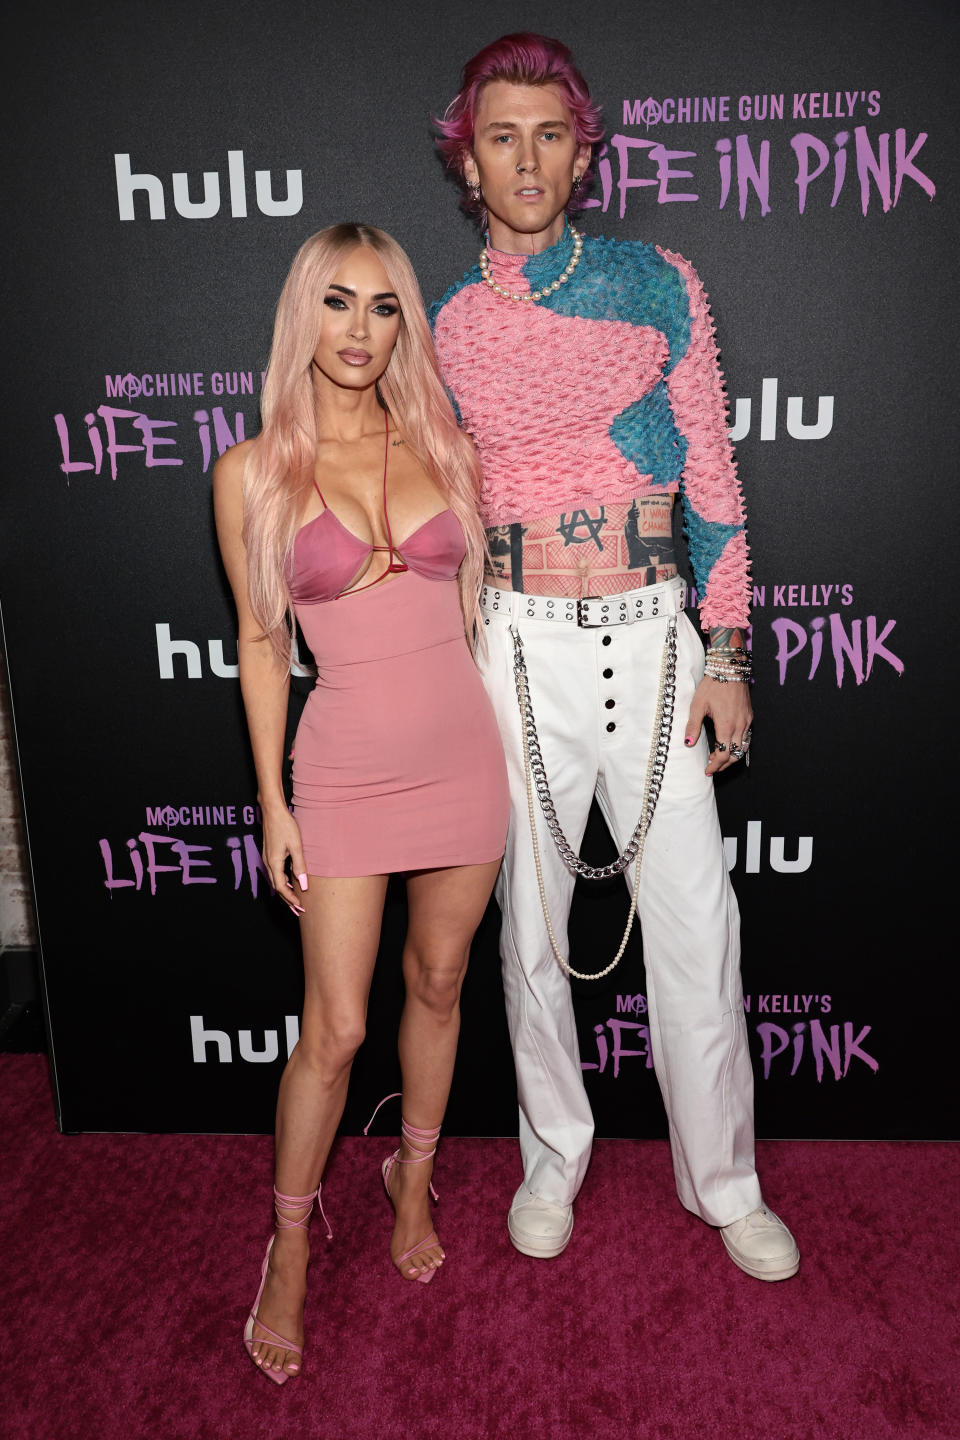 Megan Fox and fiancé Machine Gun Kelly debut pink hair at premiere